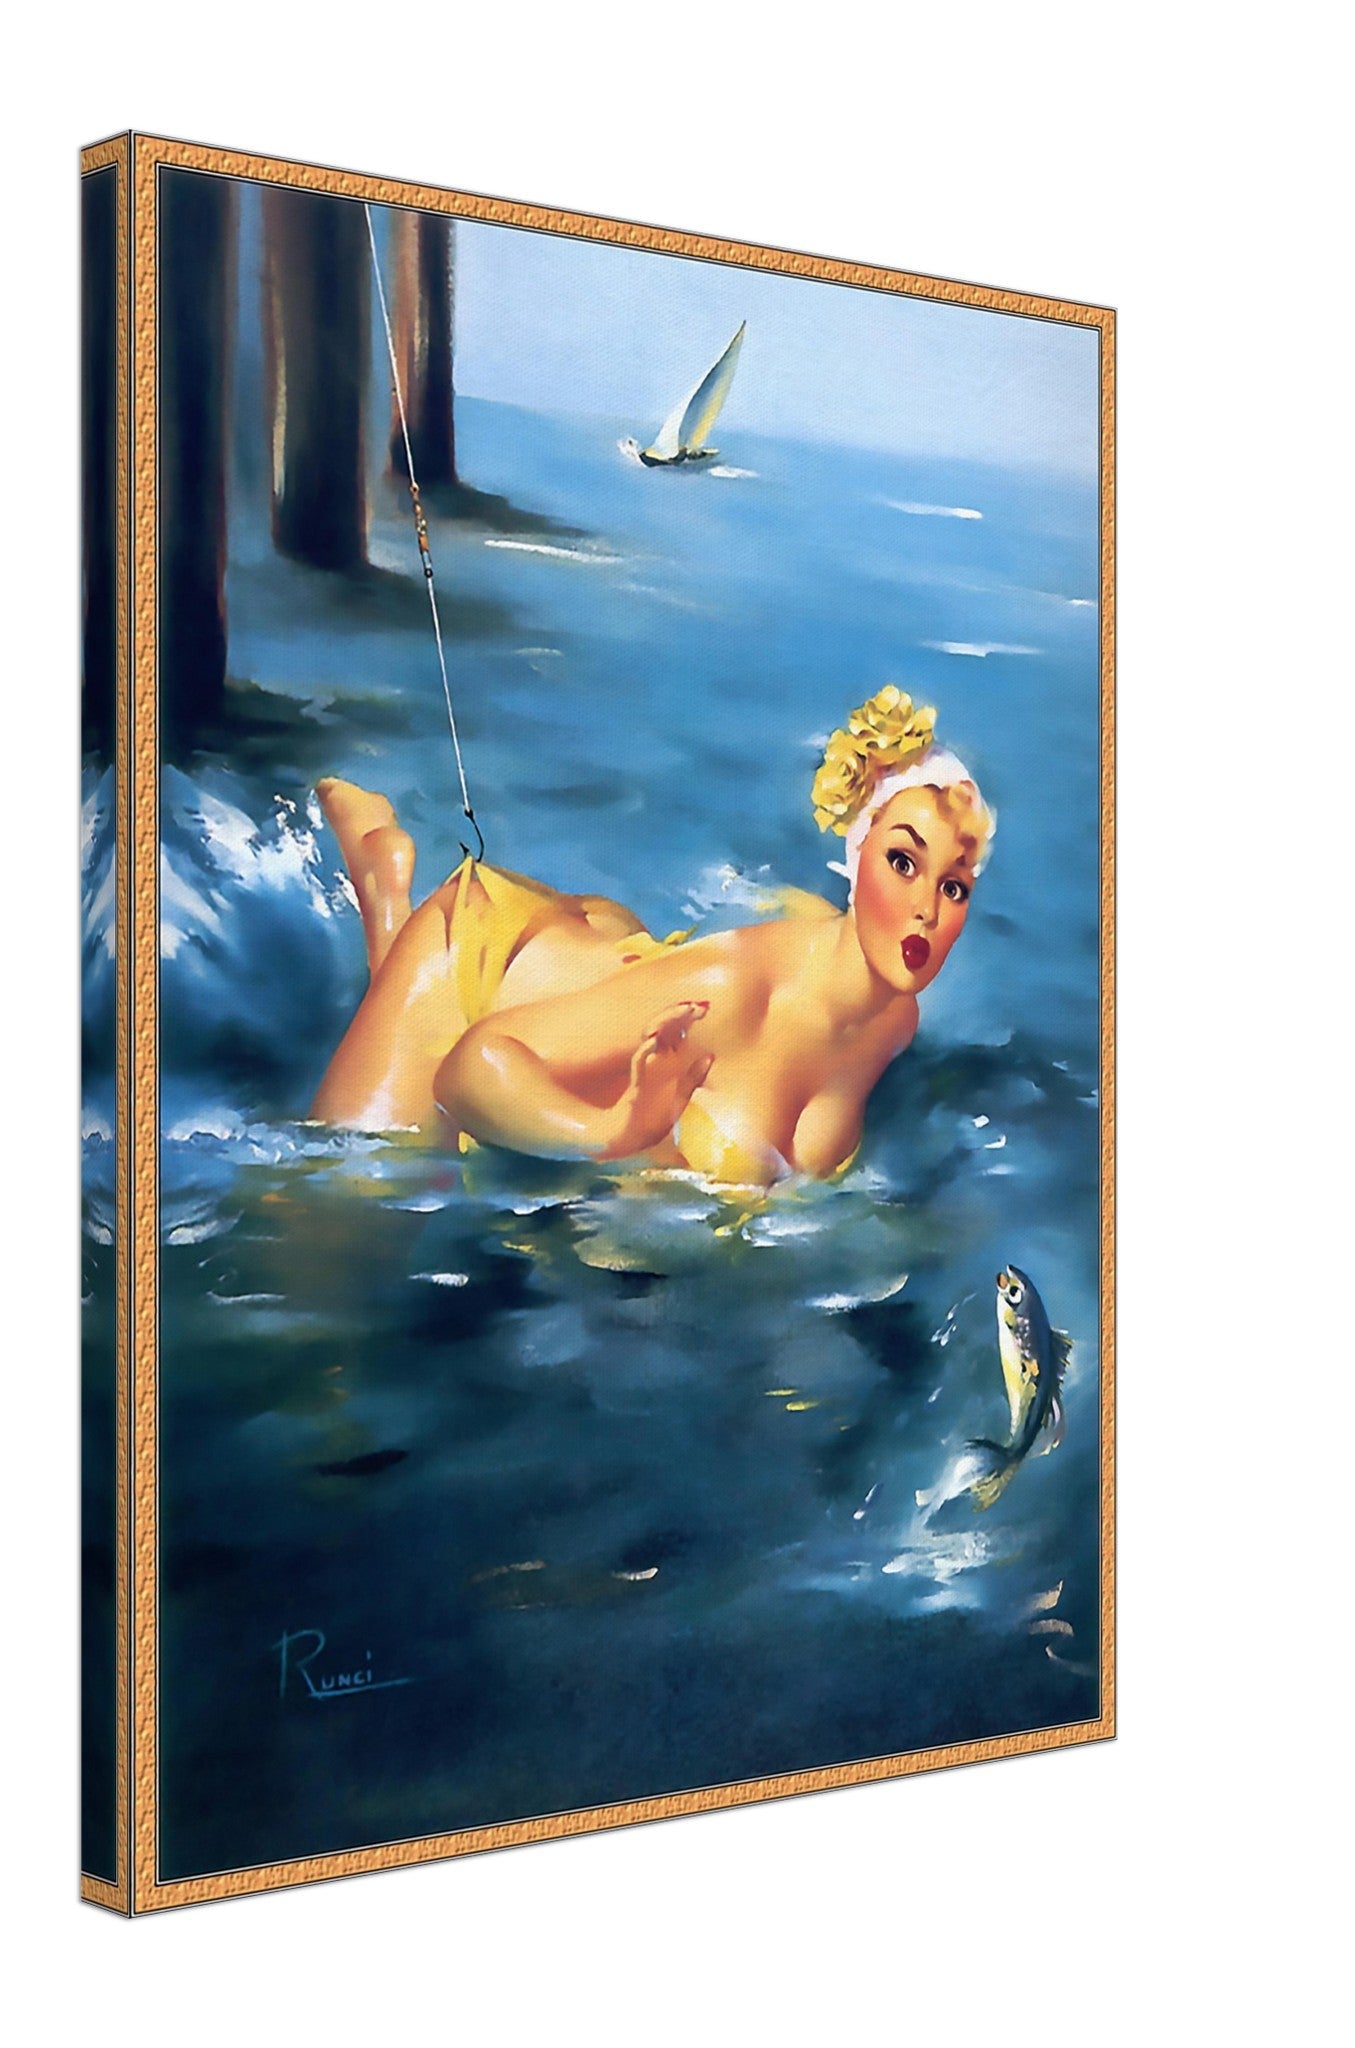 Vintage Pin Up Girl Canvas, Yellow Bikini, Edward Runci - Vintage Art - Retro Pin Up Girl Canvas Print - Late 1940'S - 1950'S - WallArtPrints4U